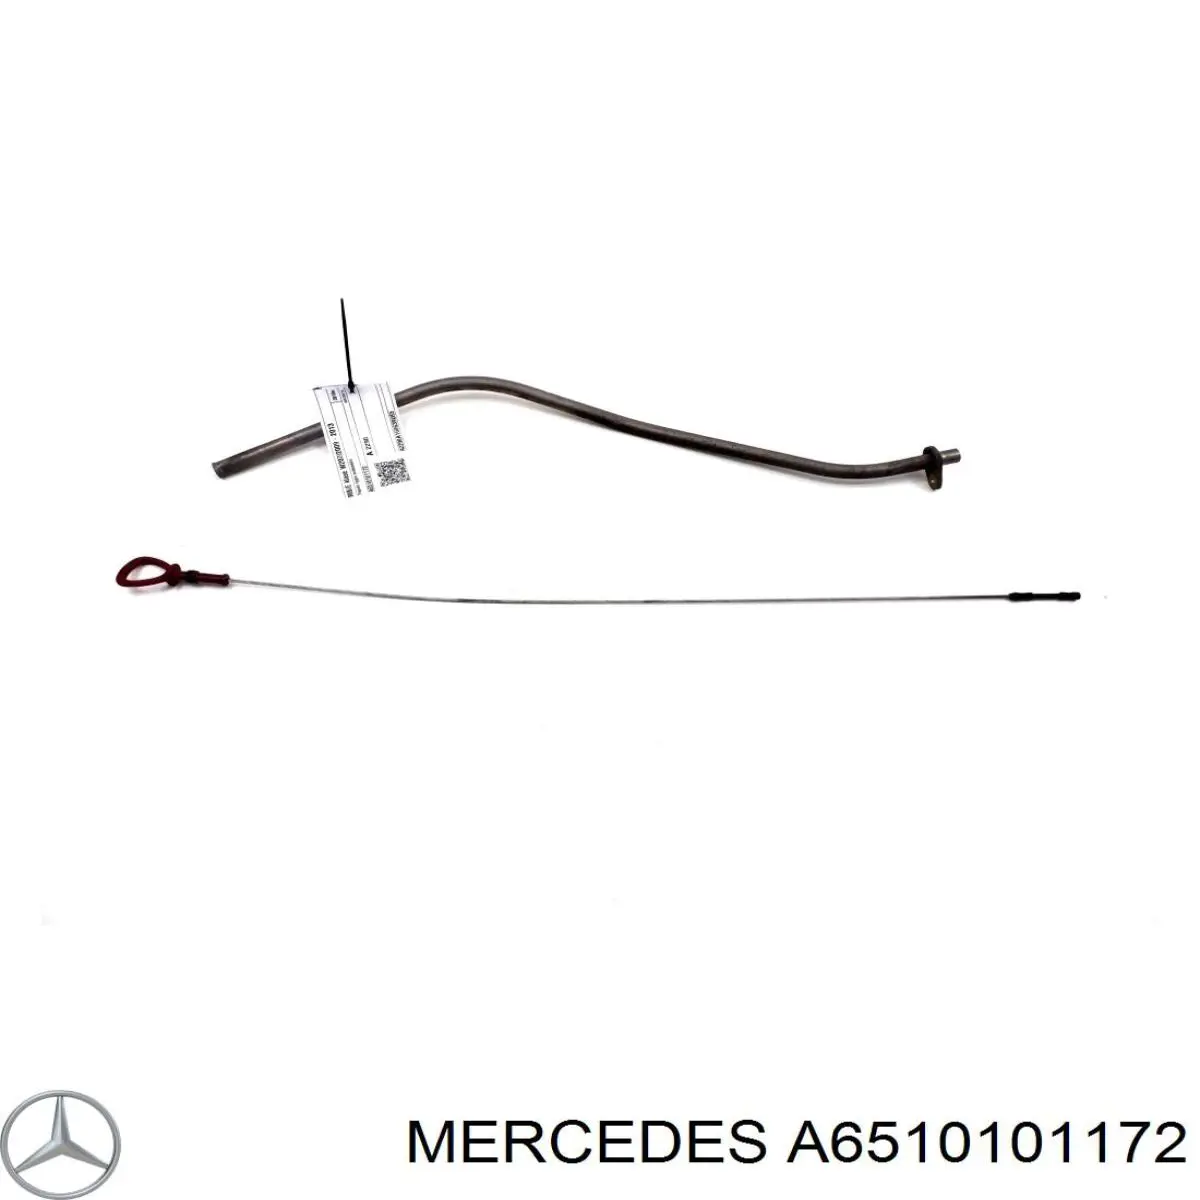 A6510101172 Mercedes sonda (indicador do nível de óleo no motor)